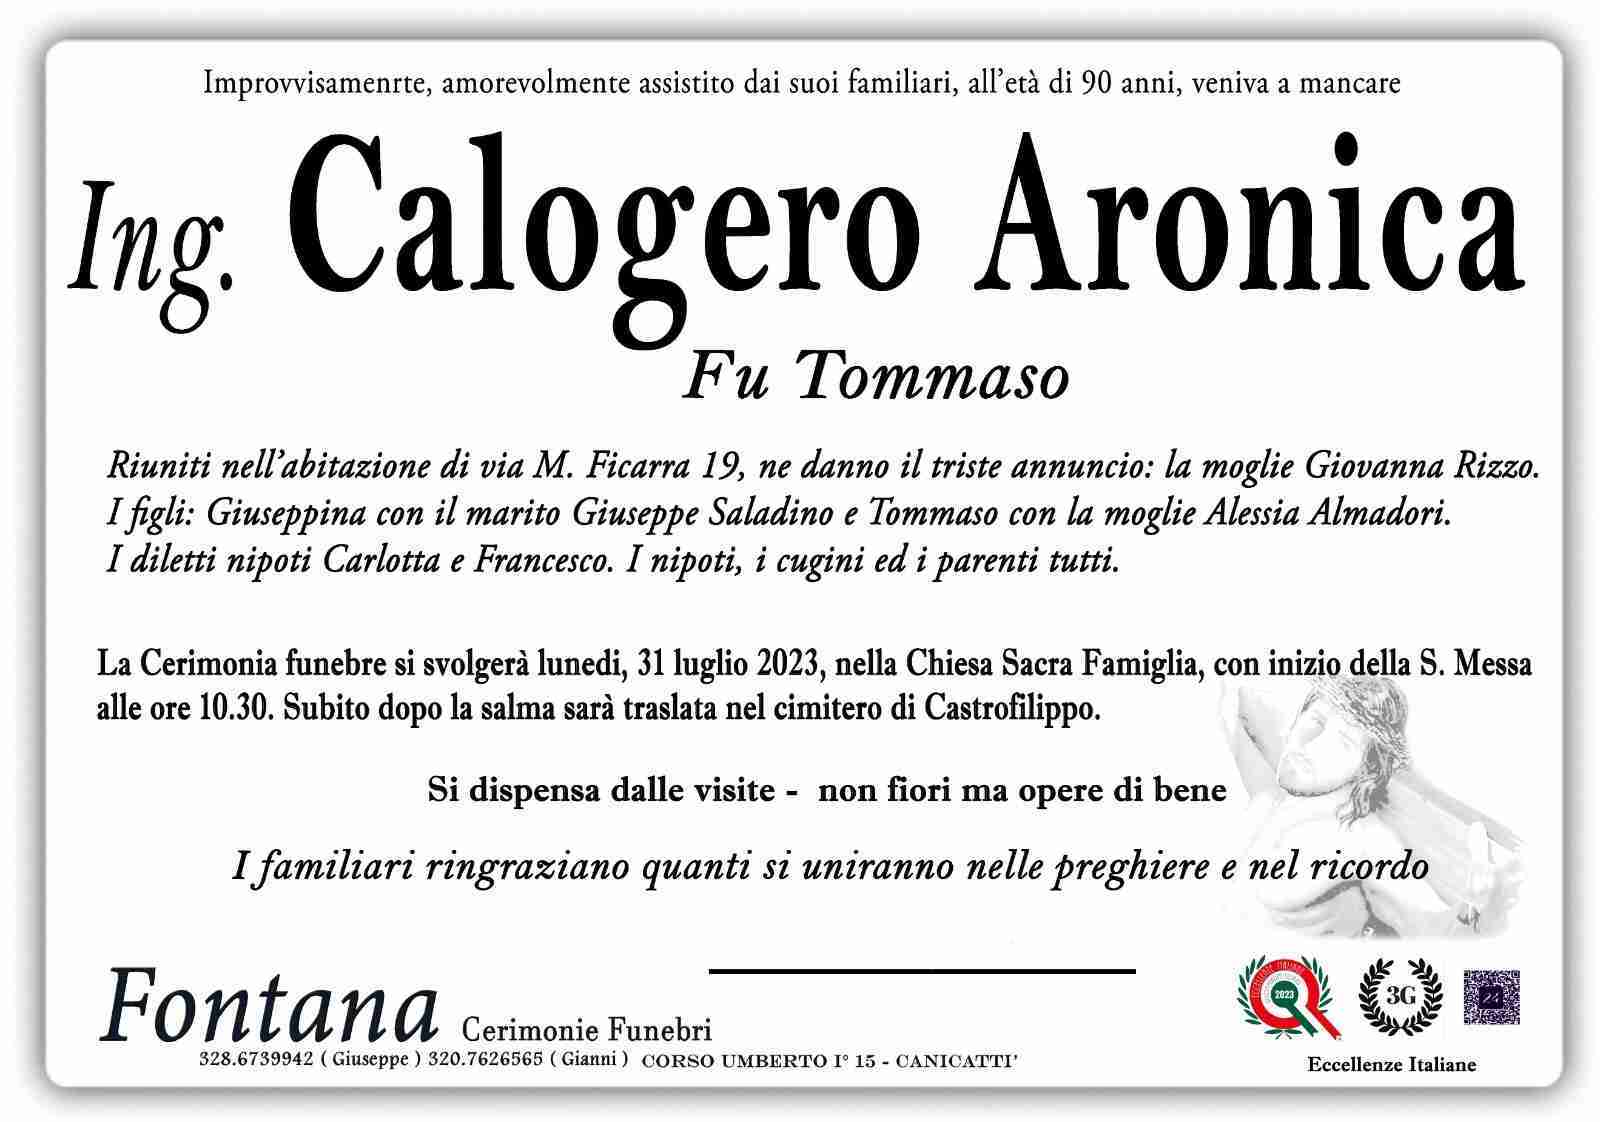 Calogero Aronica